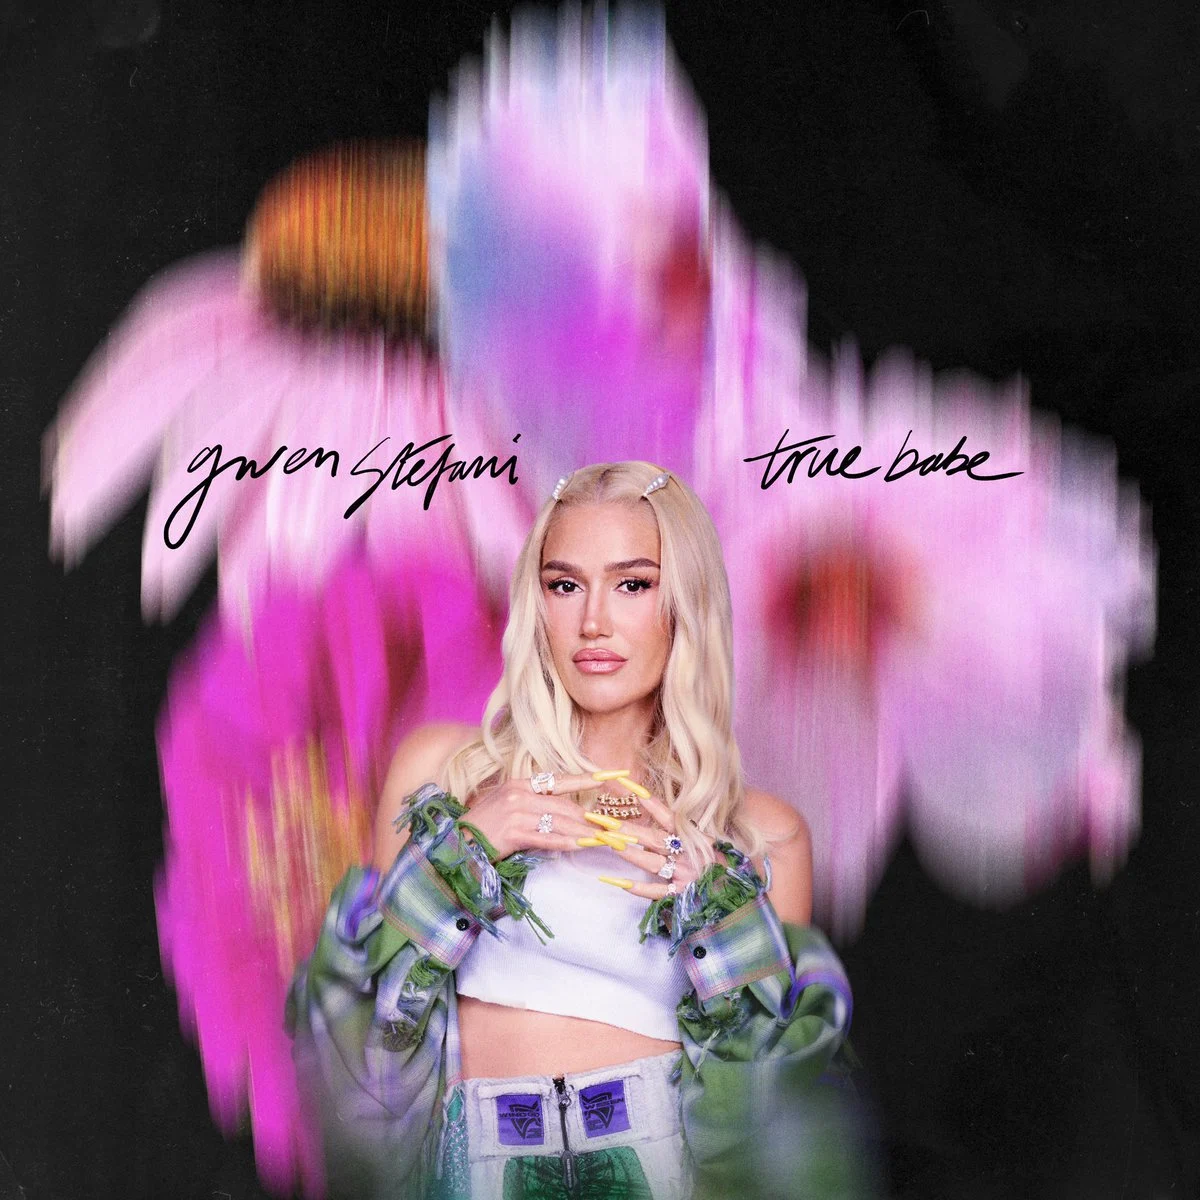 Gwen Stefani True Babe cover artwork